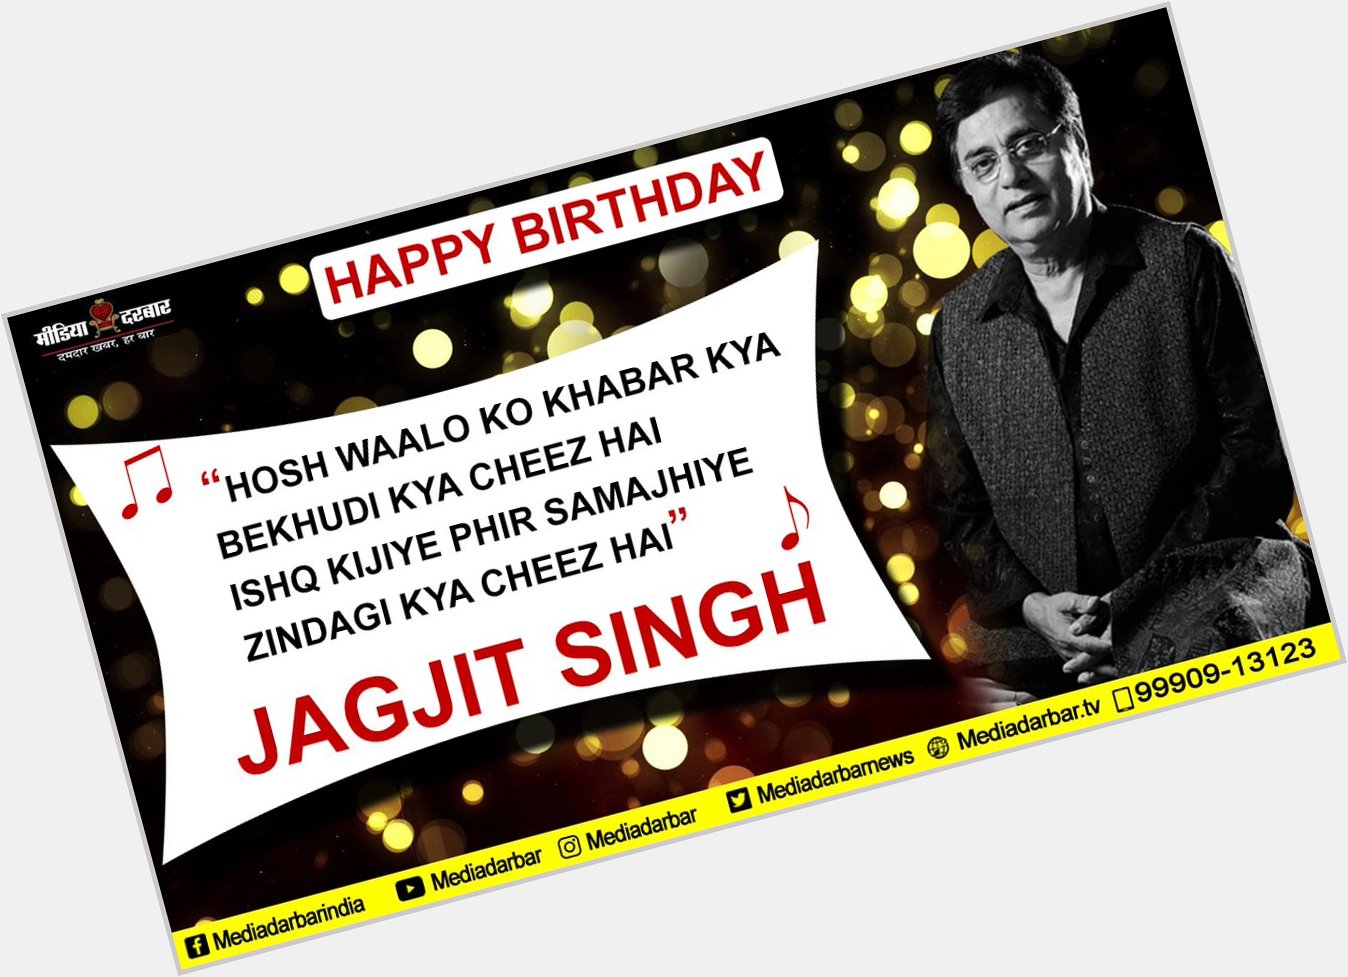 Wishing Jagjit Singh a very happy birthday 